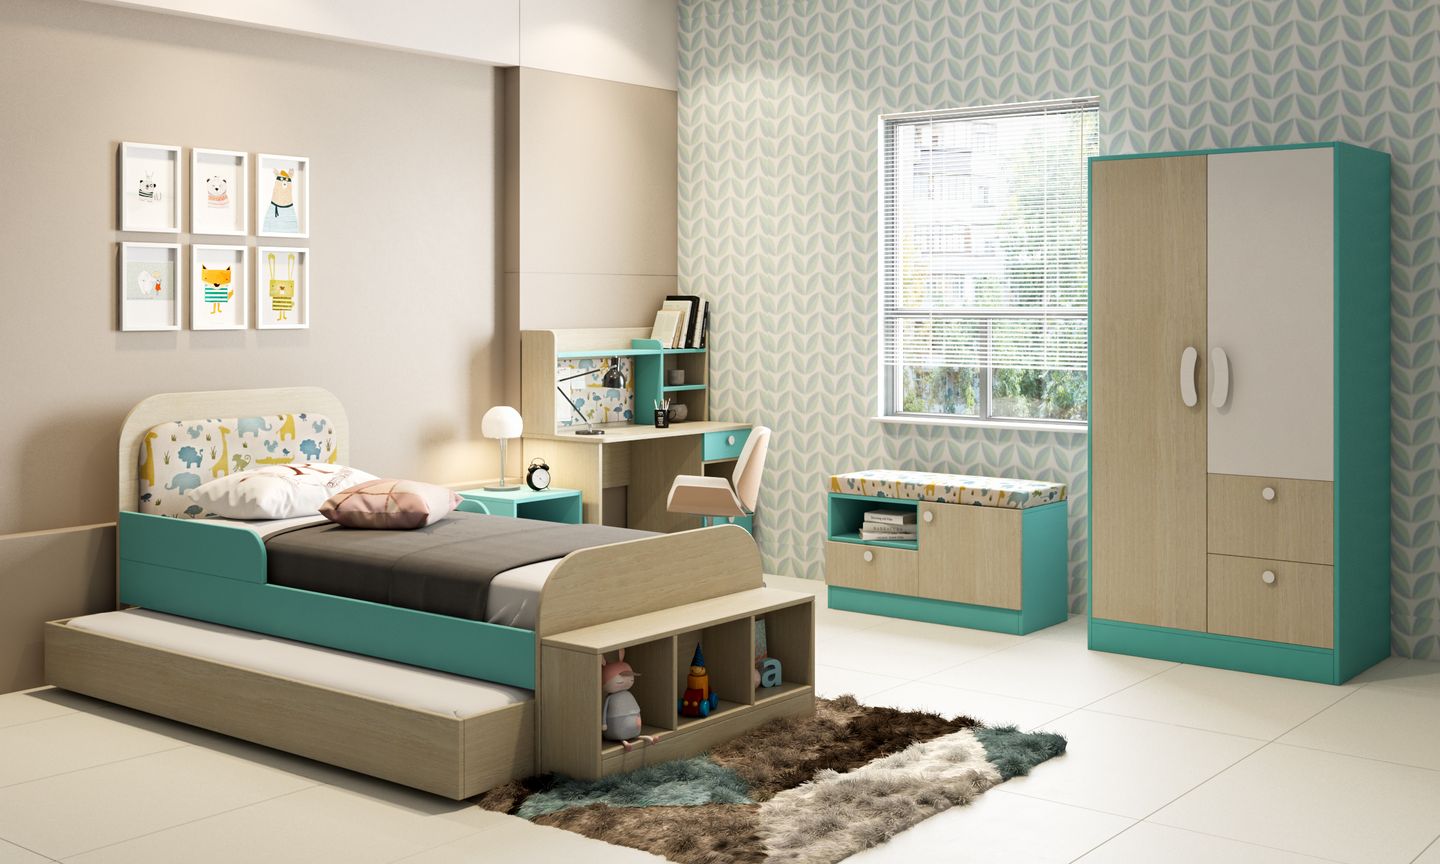 Acacia Kids Bedroom Interior Design